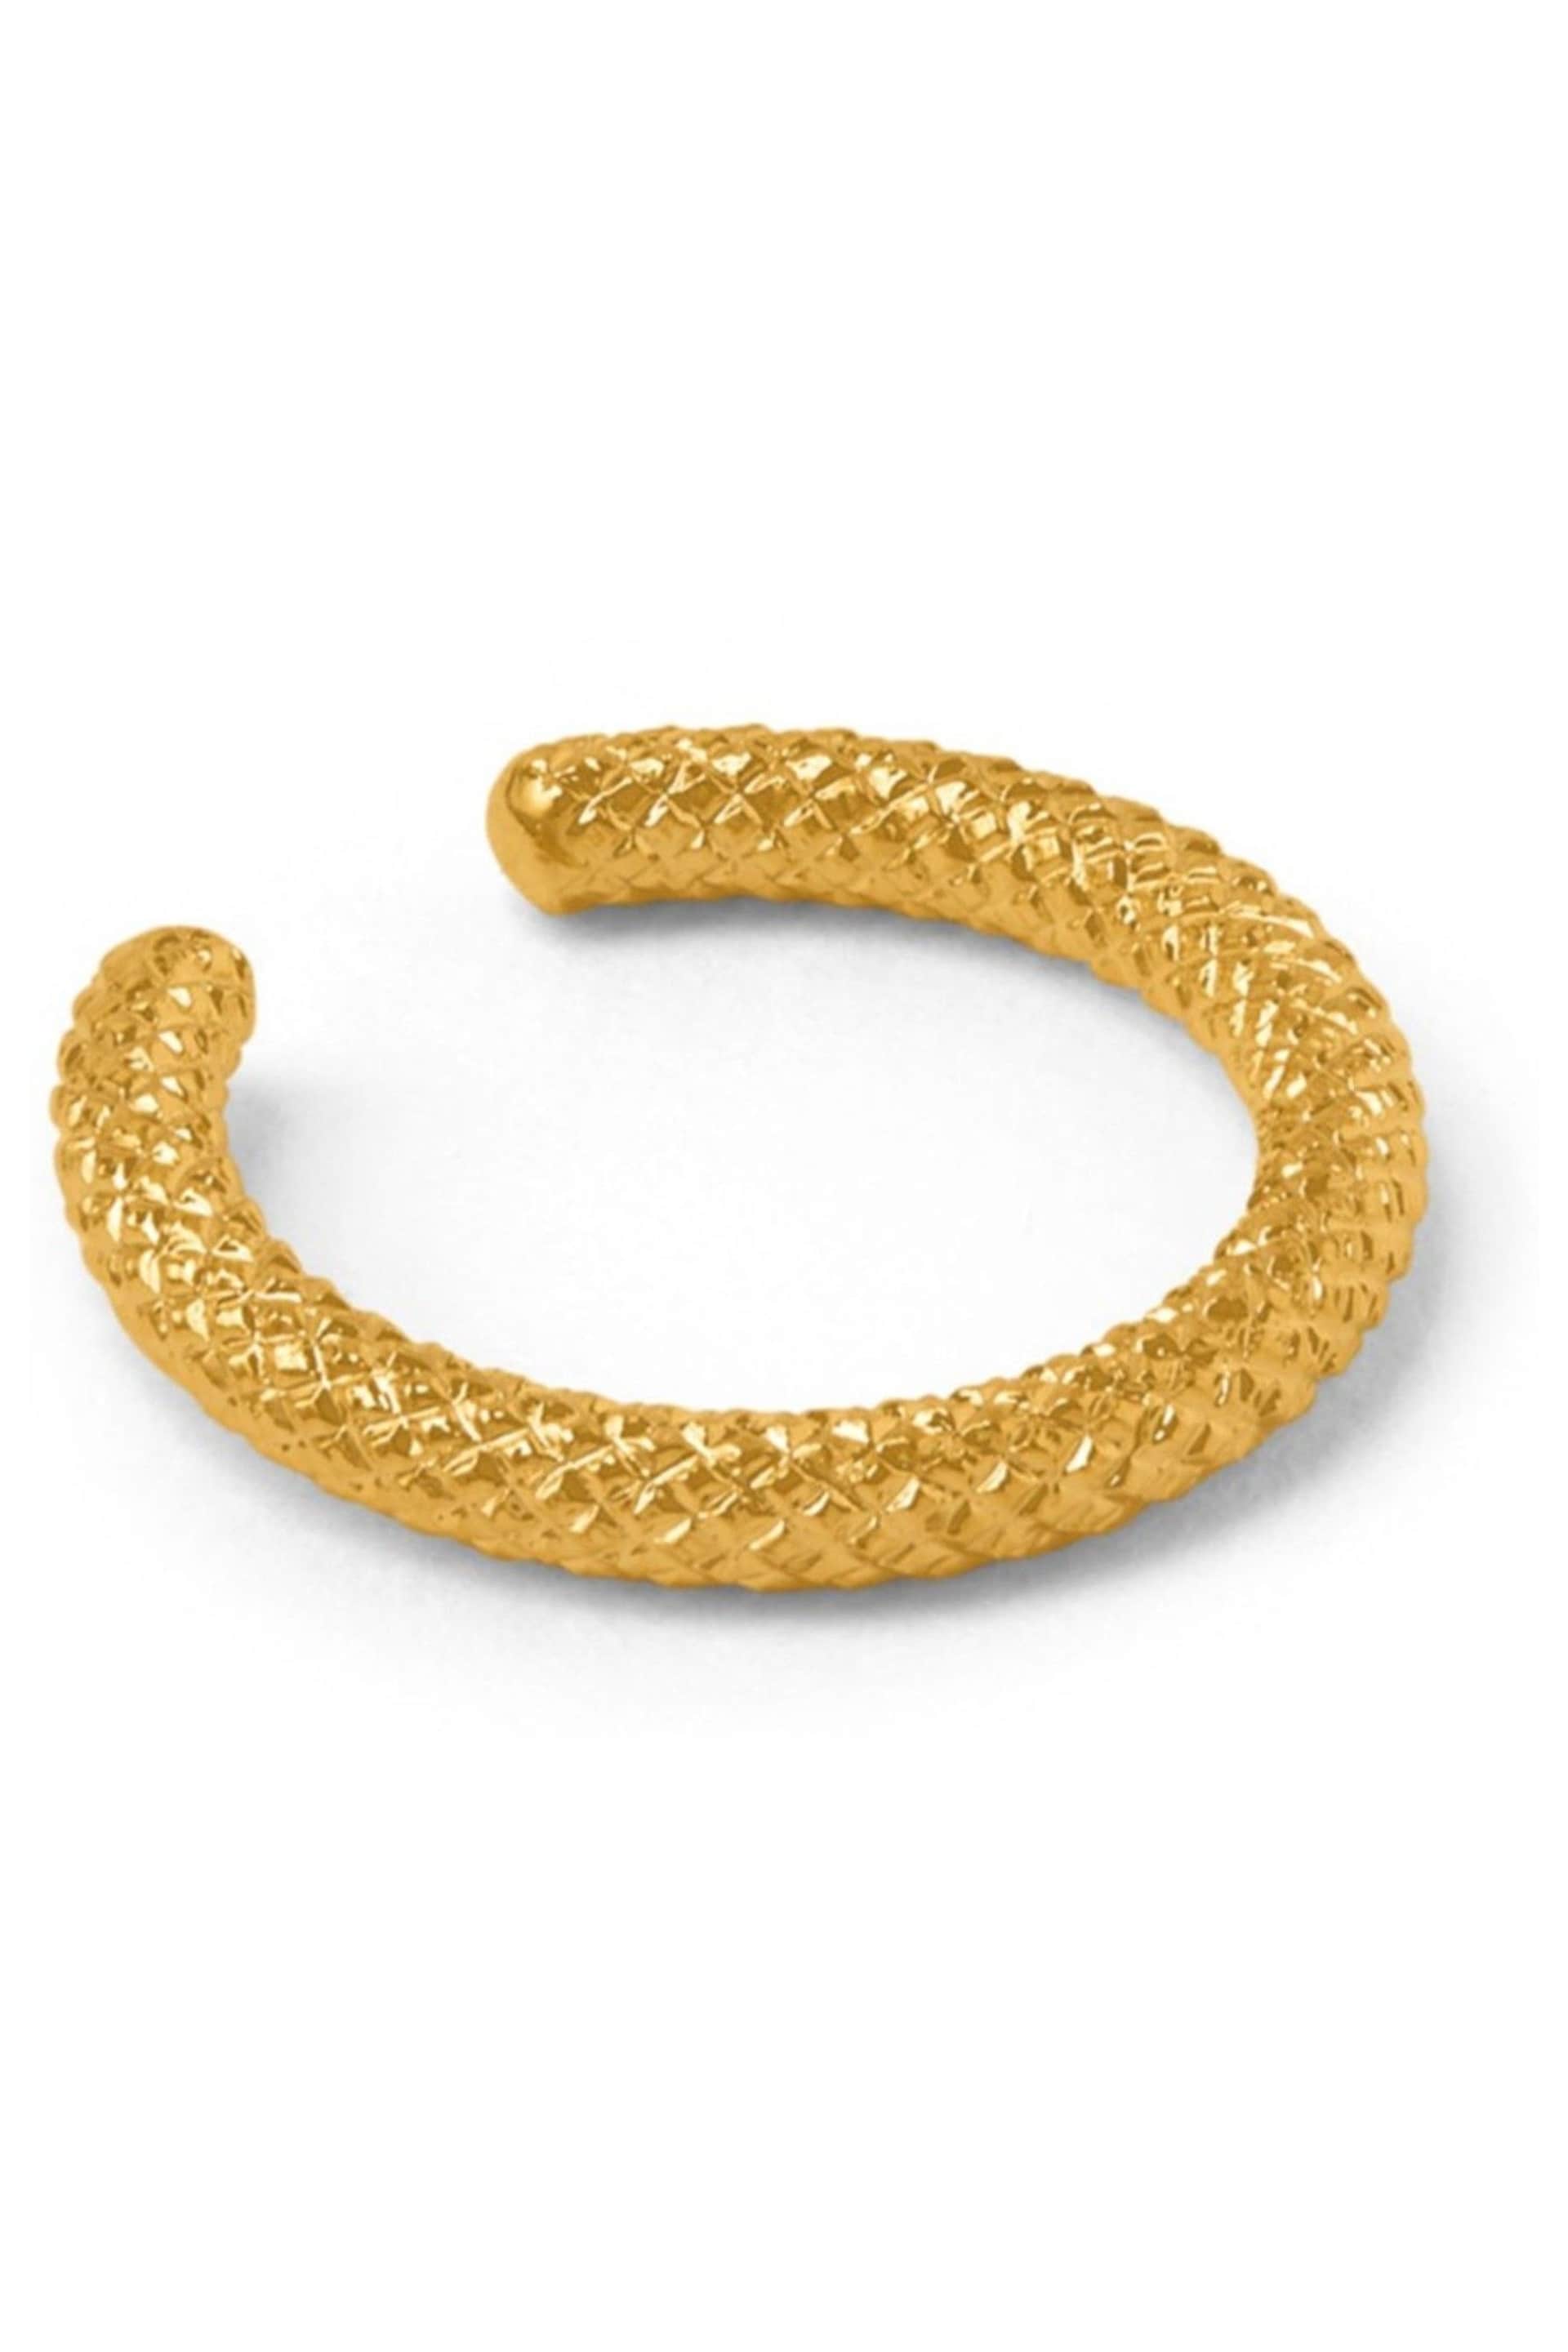 Orelia London 18k Gold Plating Snake Textured Ear Cuff - Image 1 of 2